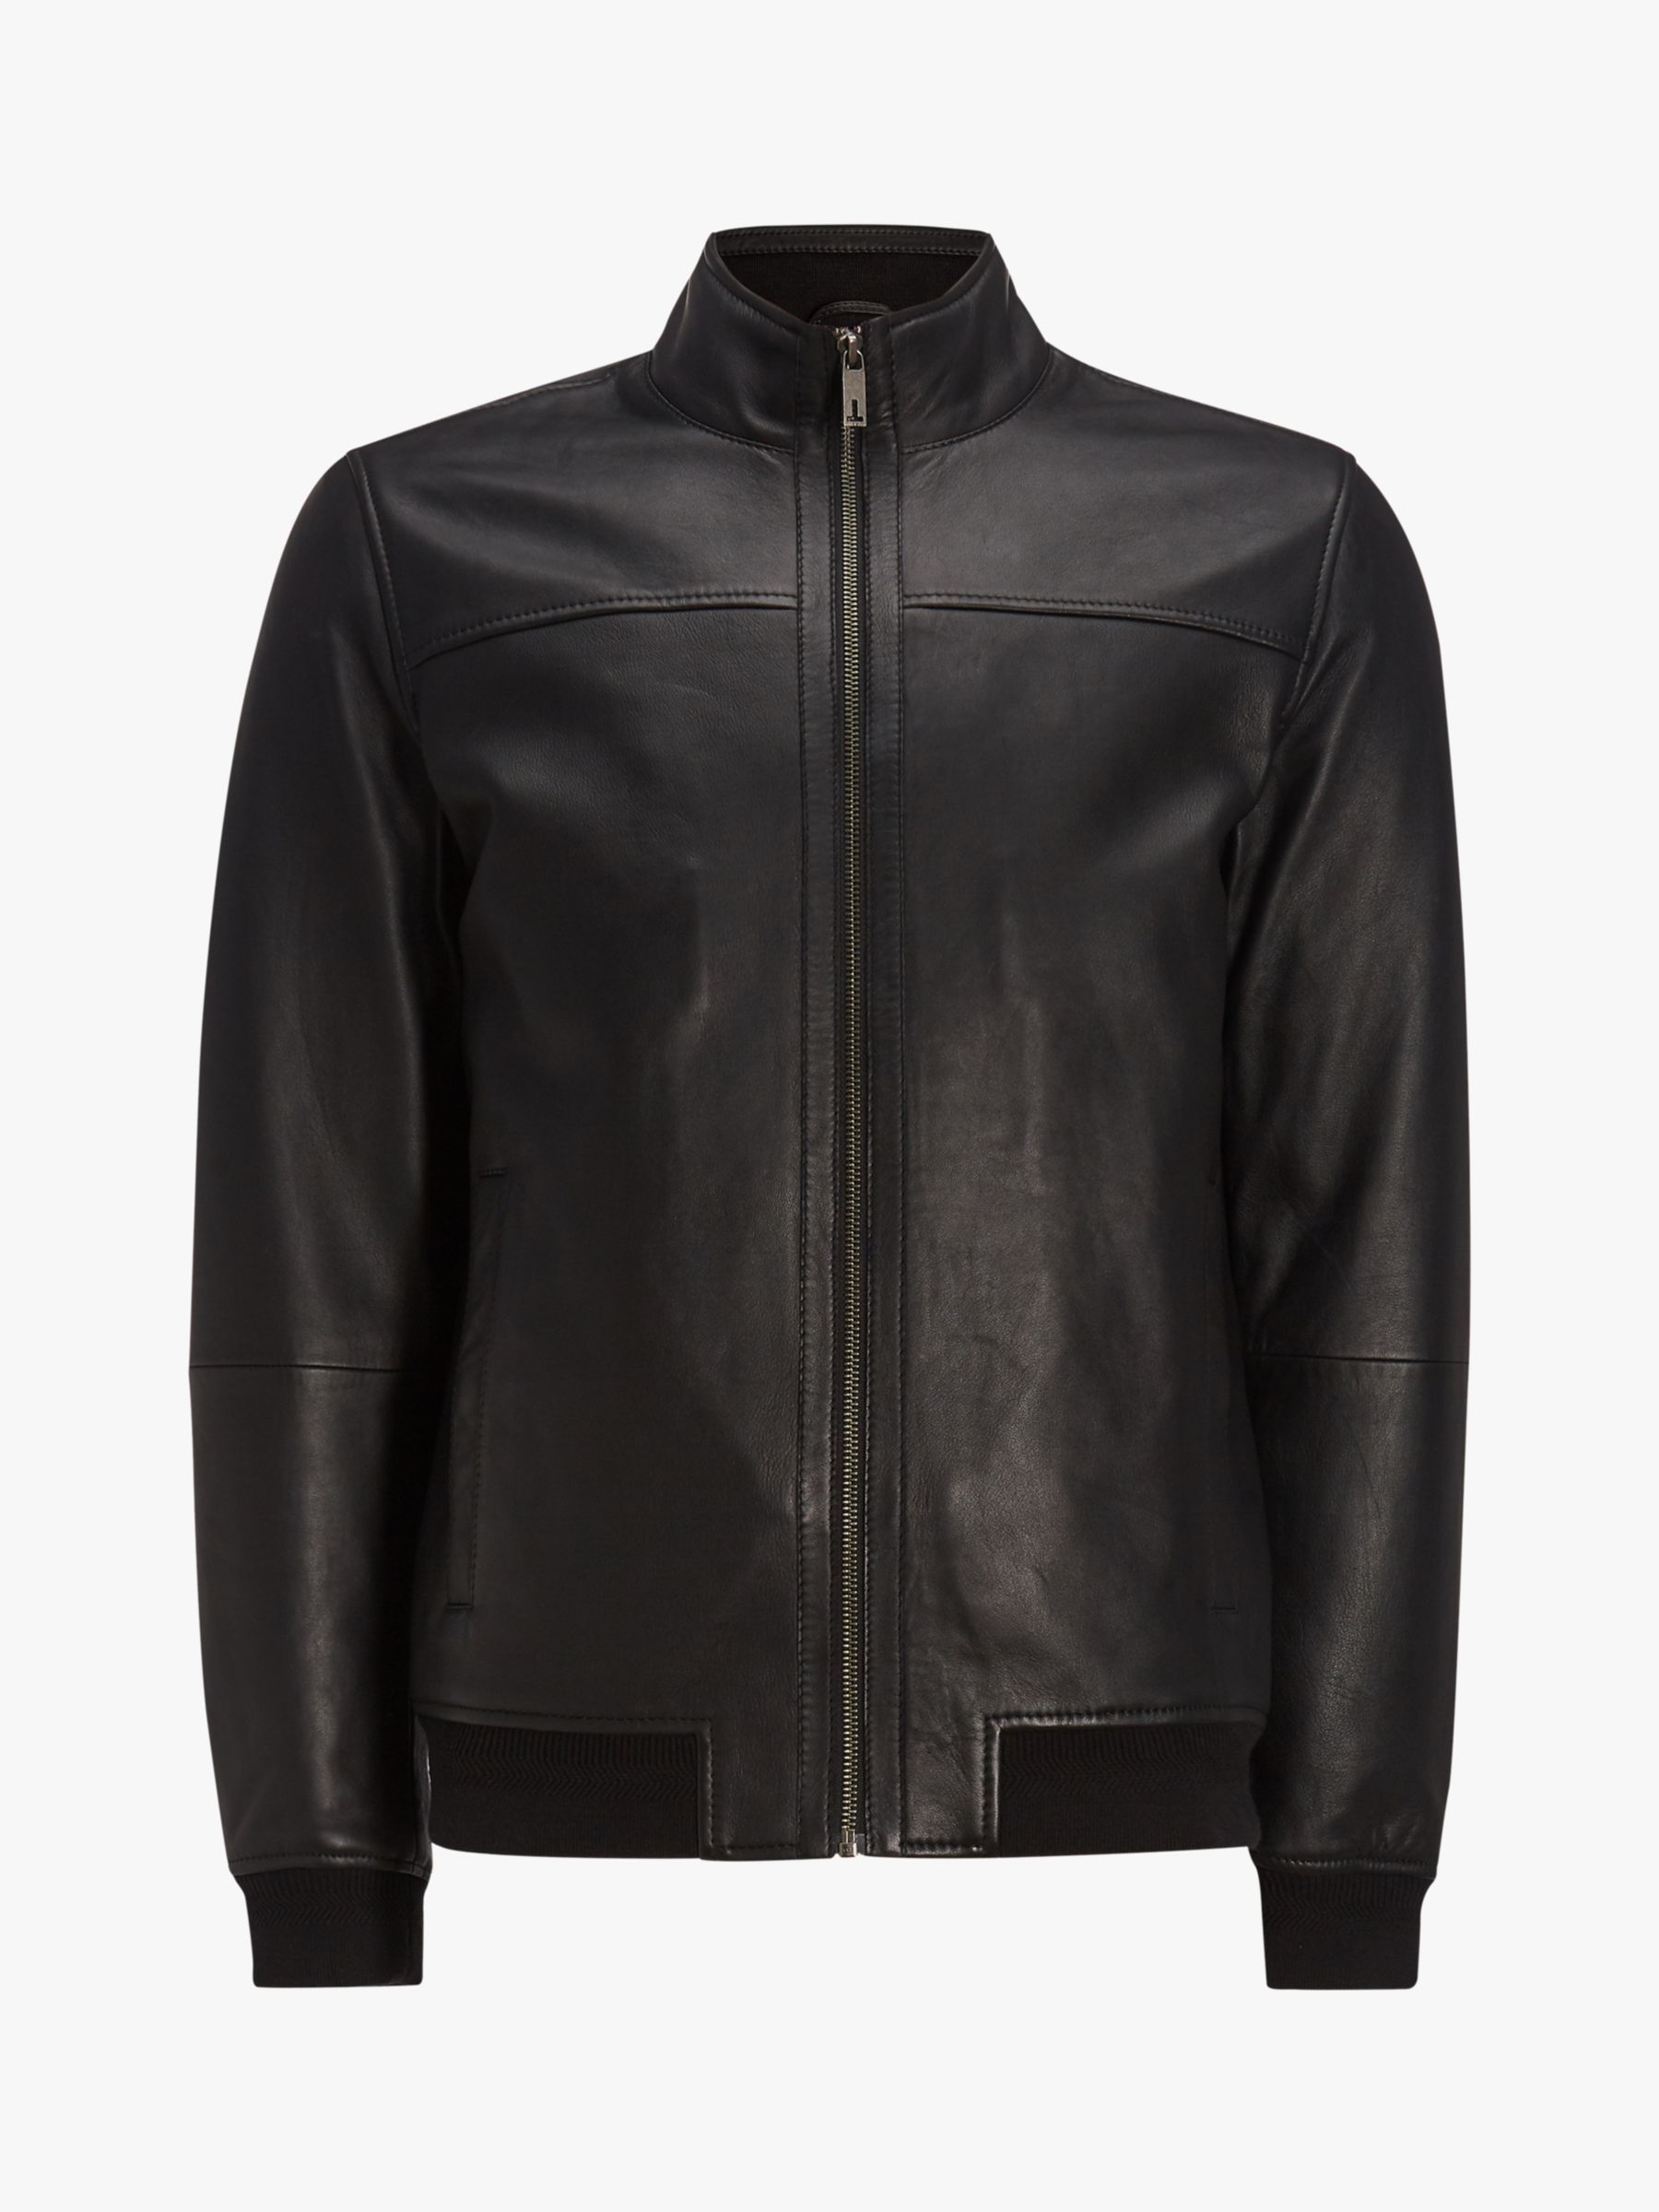 Ted Baker Dwite Leather Bomber Jacket, Black at John Lewis & Partners